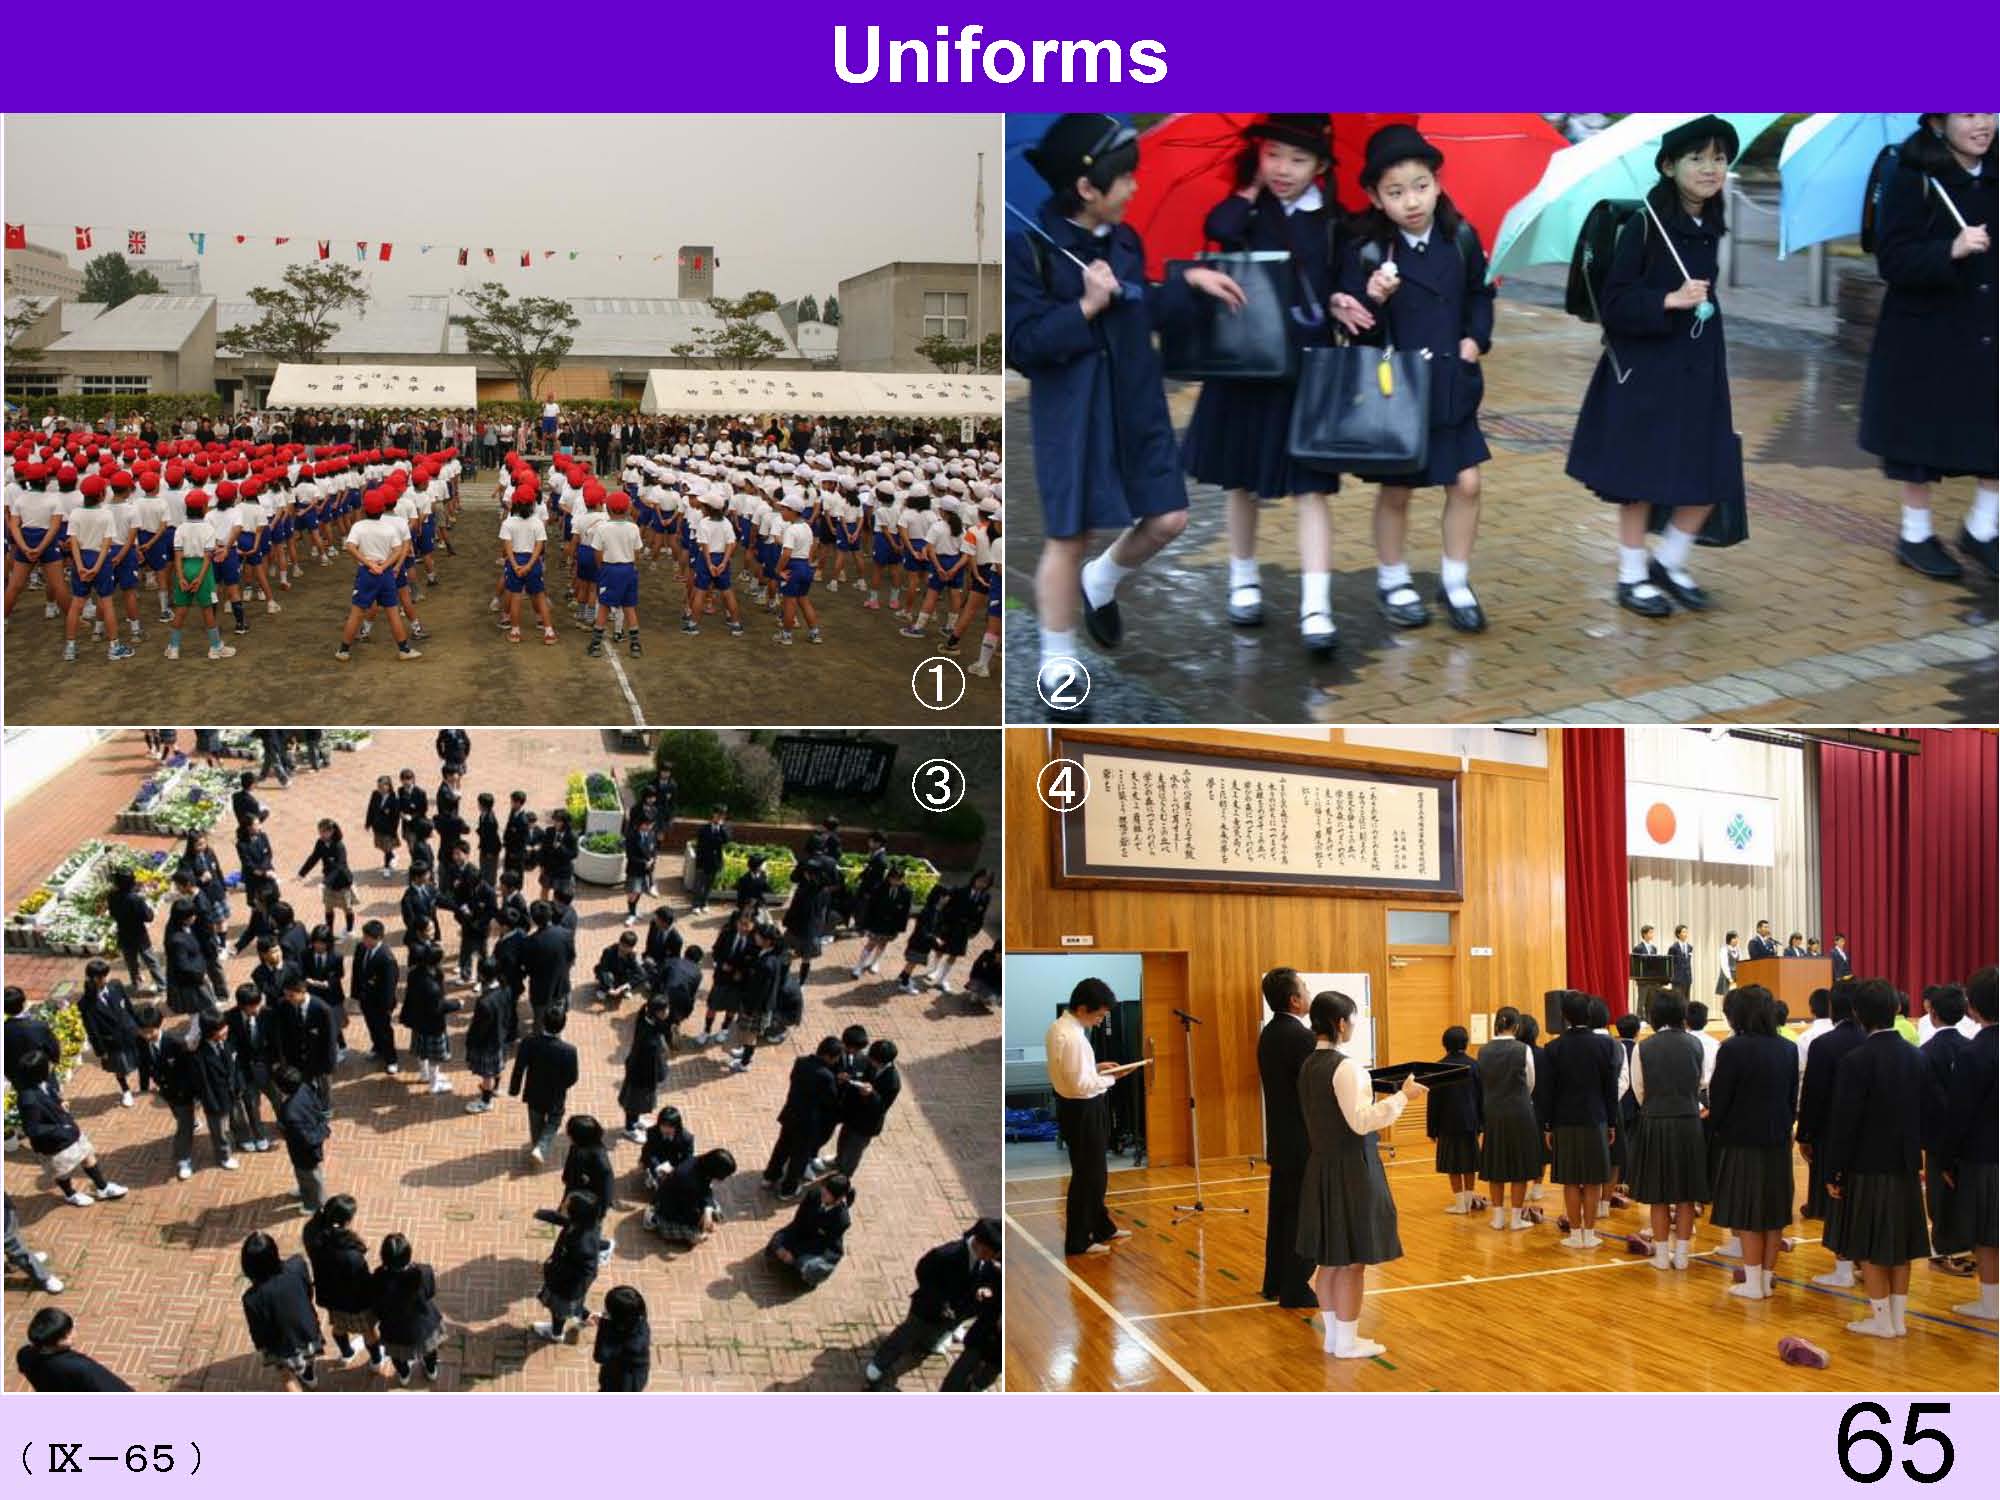 IX Japanese School Life and Culture